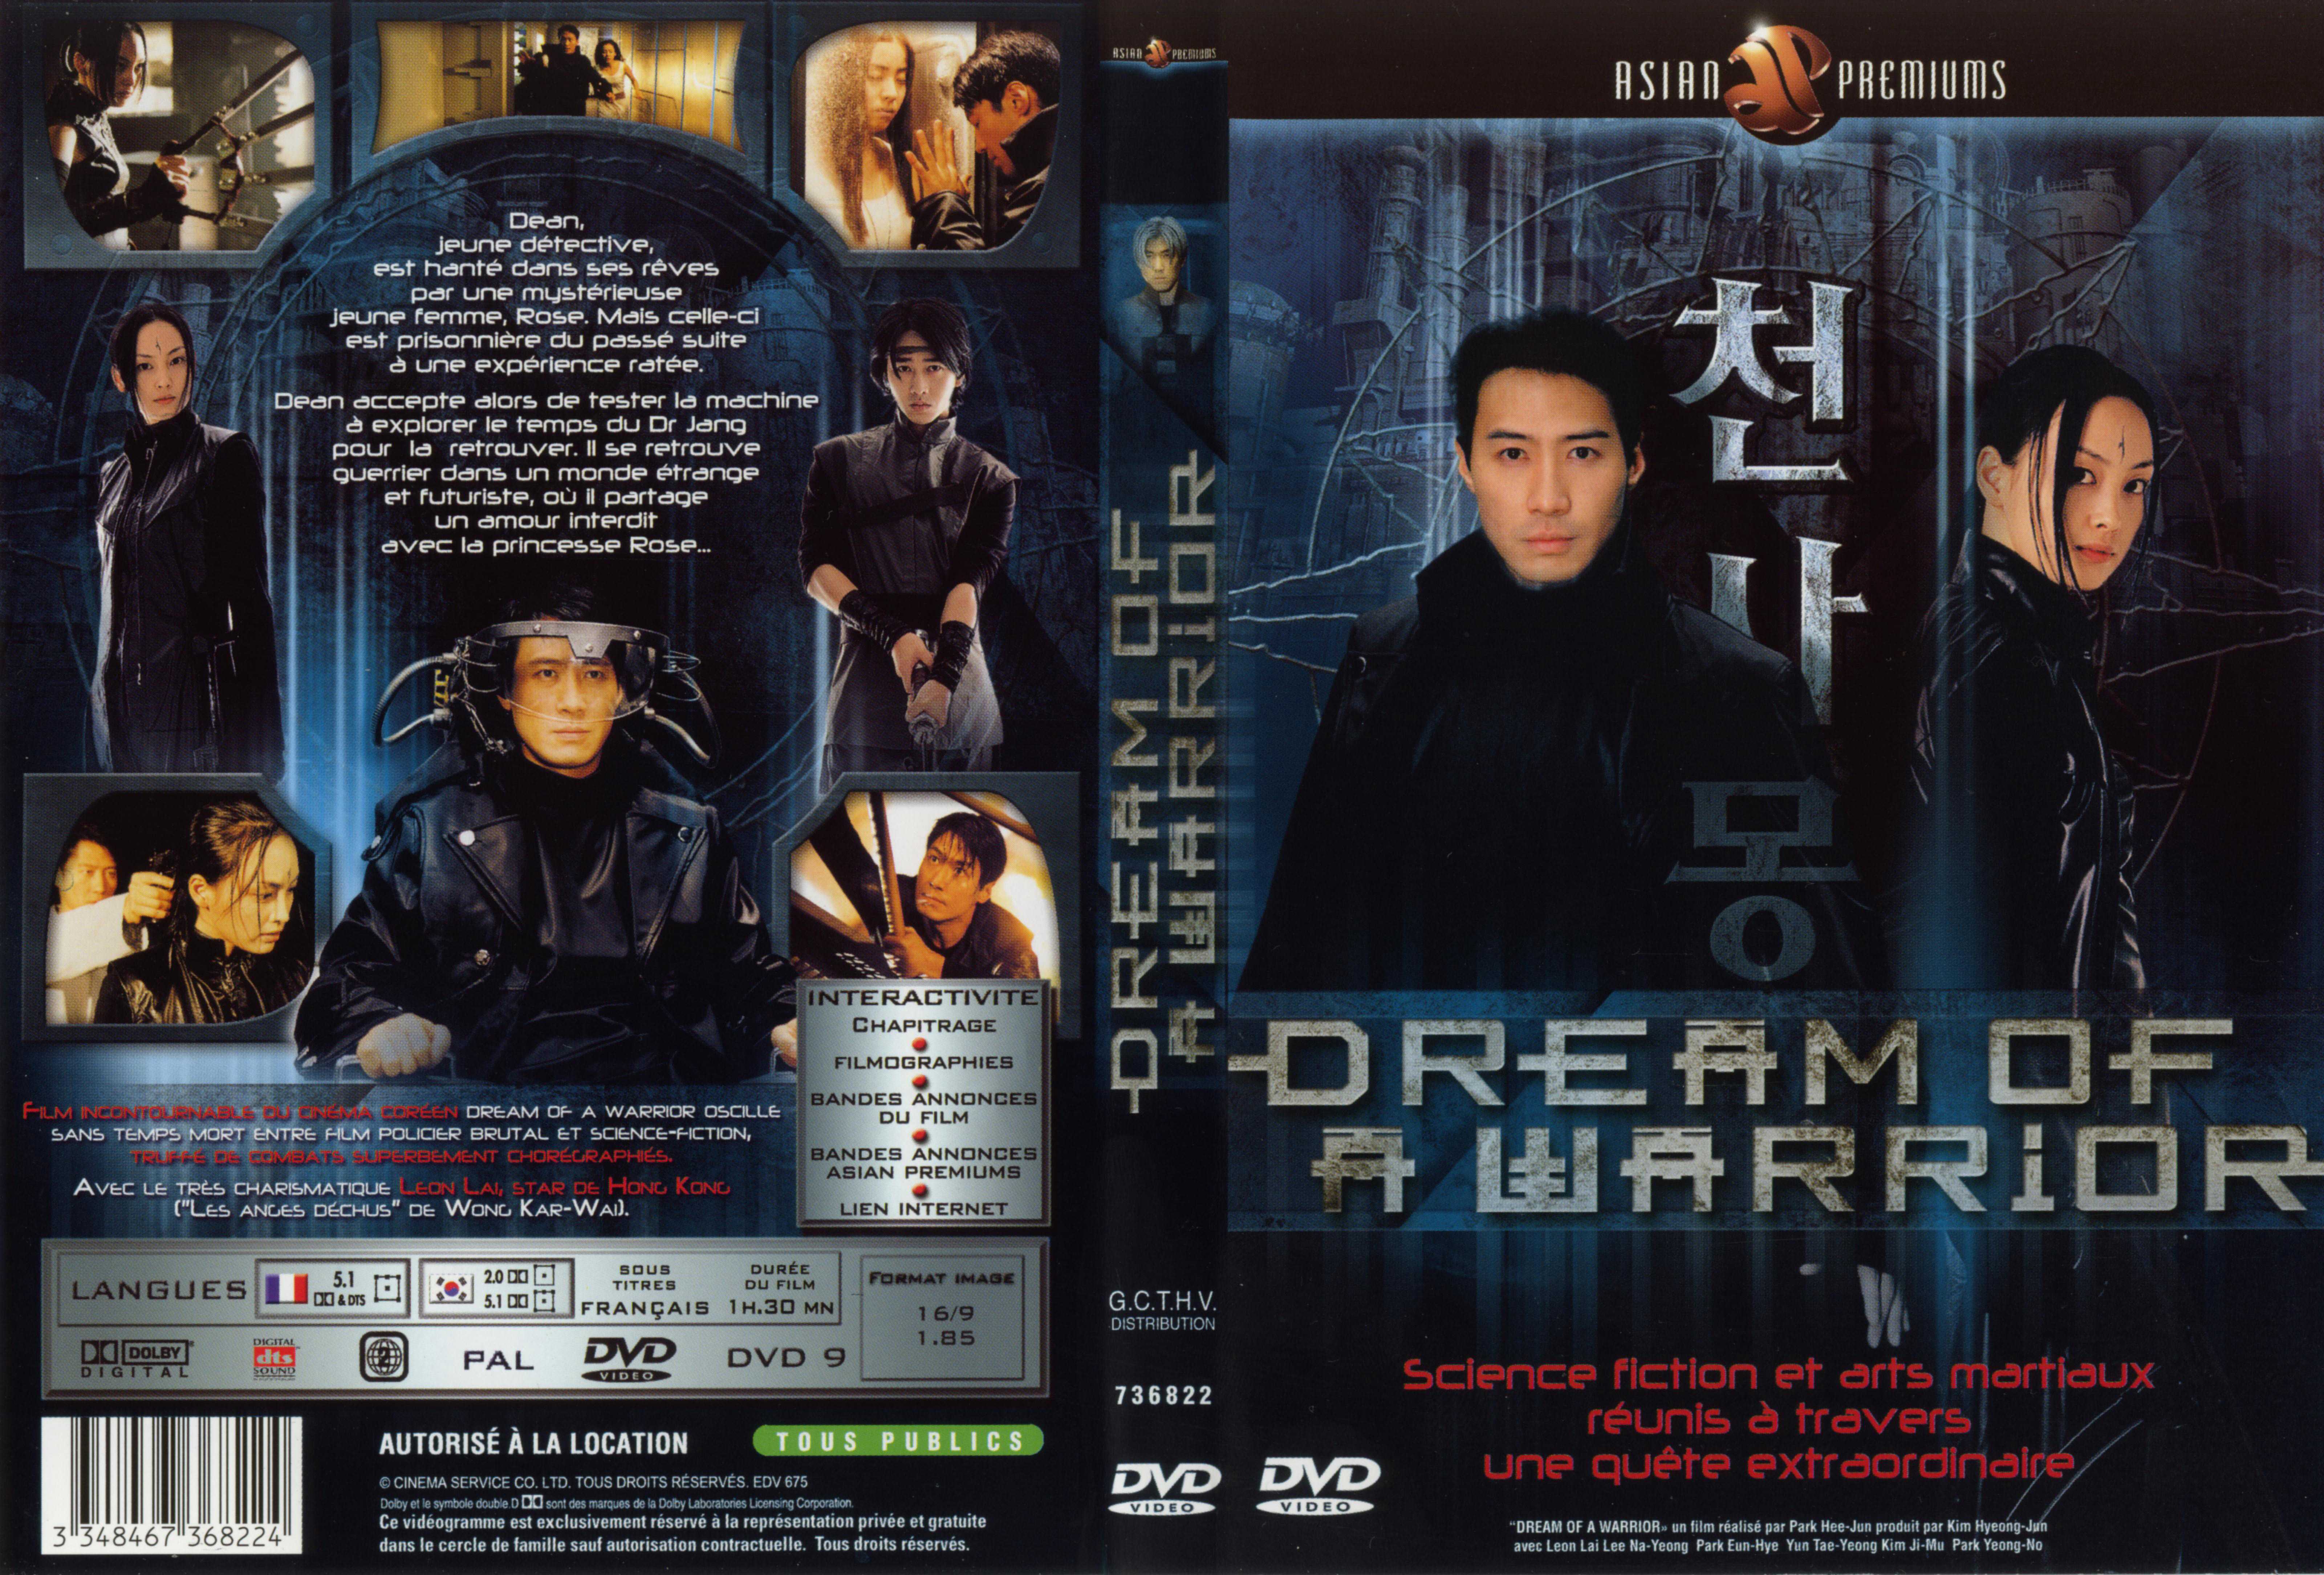 Jaquette DVD Dream of a warrior